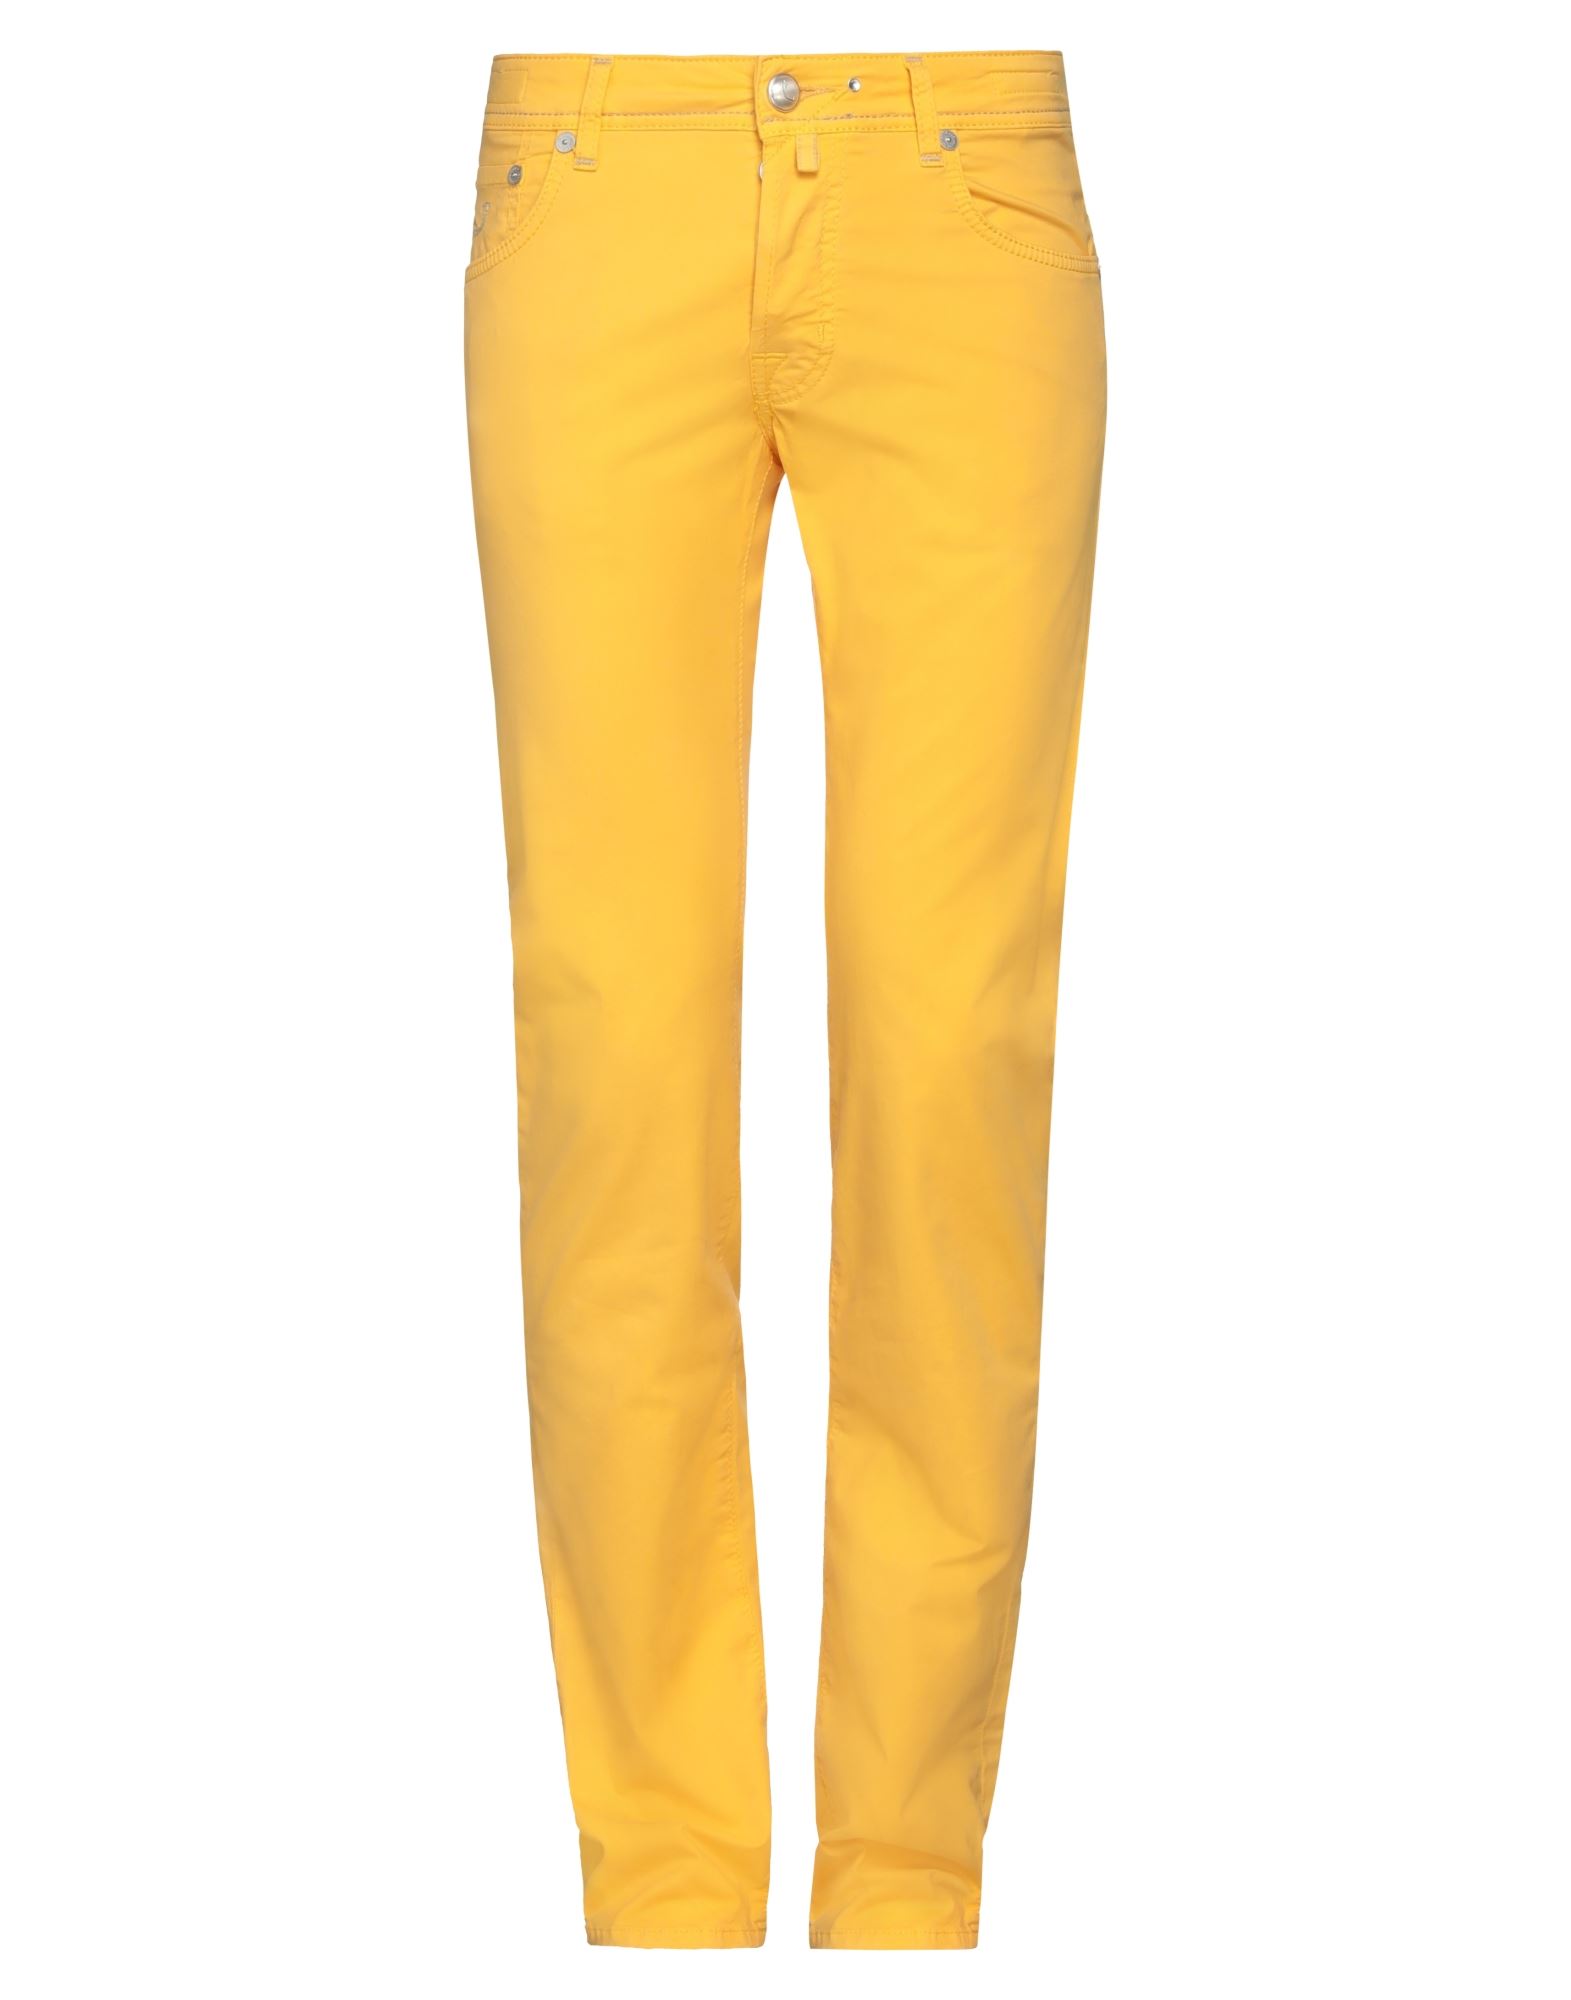 Jacob Cohёn Pants In Yellow